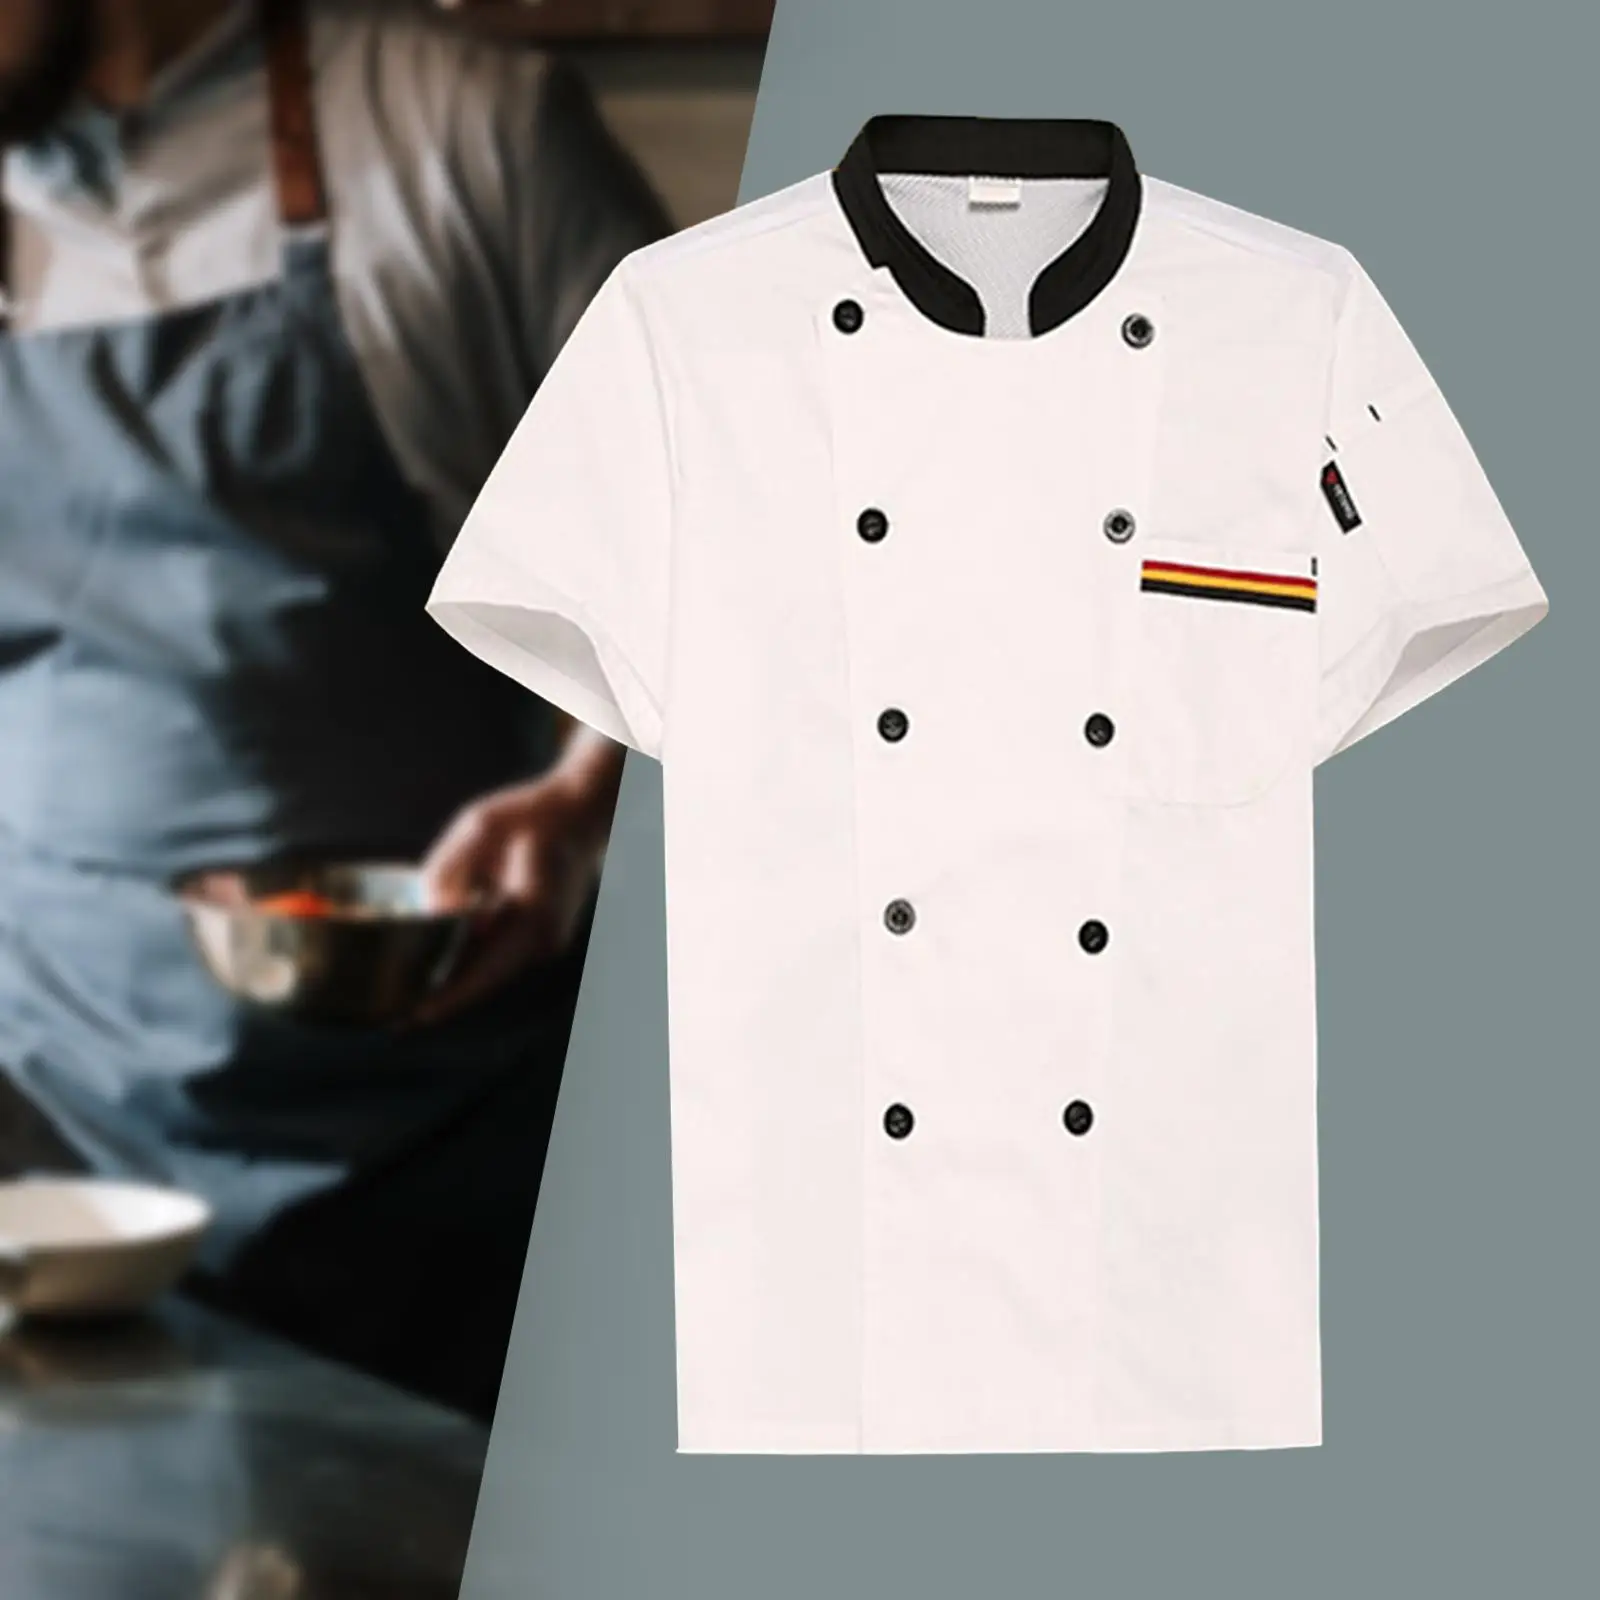 Men Women Chef Jacket, Short Length Sleeve Chef Coat, Professional Uniform for Cafe Restaurant